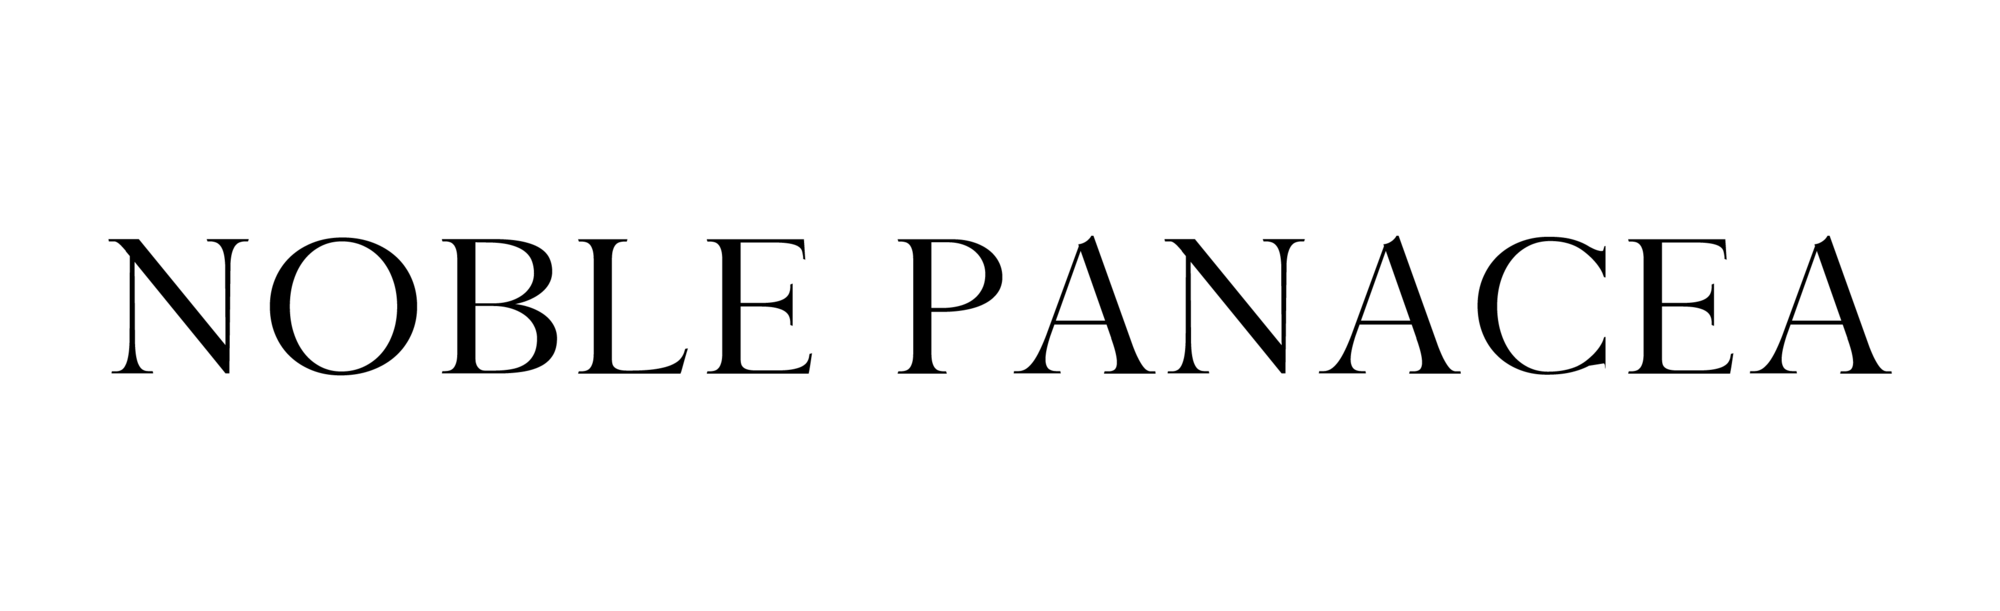 Noble Panacea logo